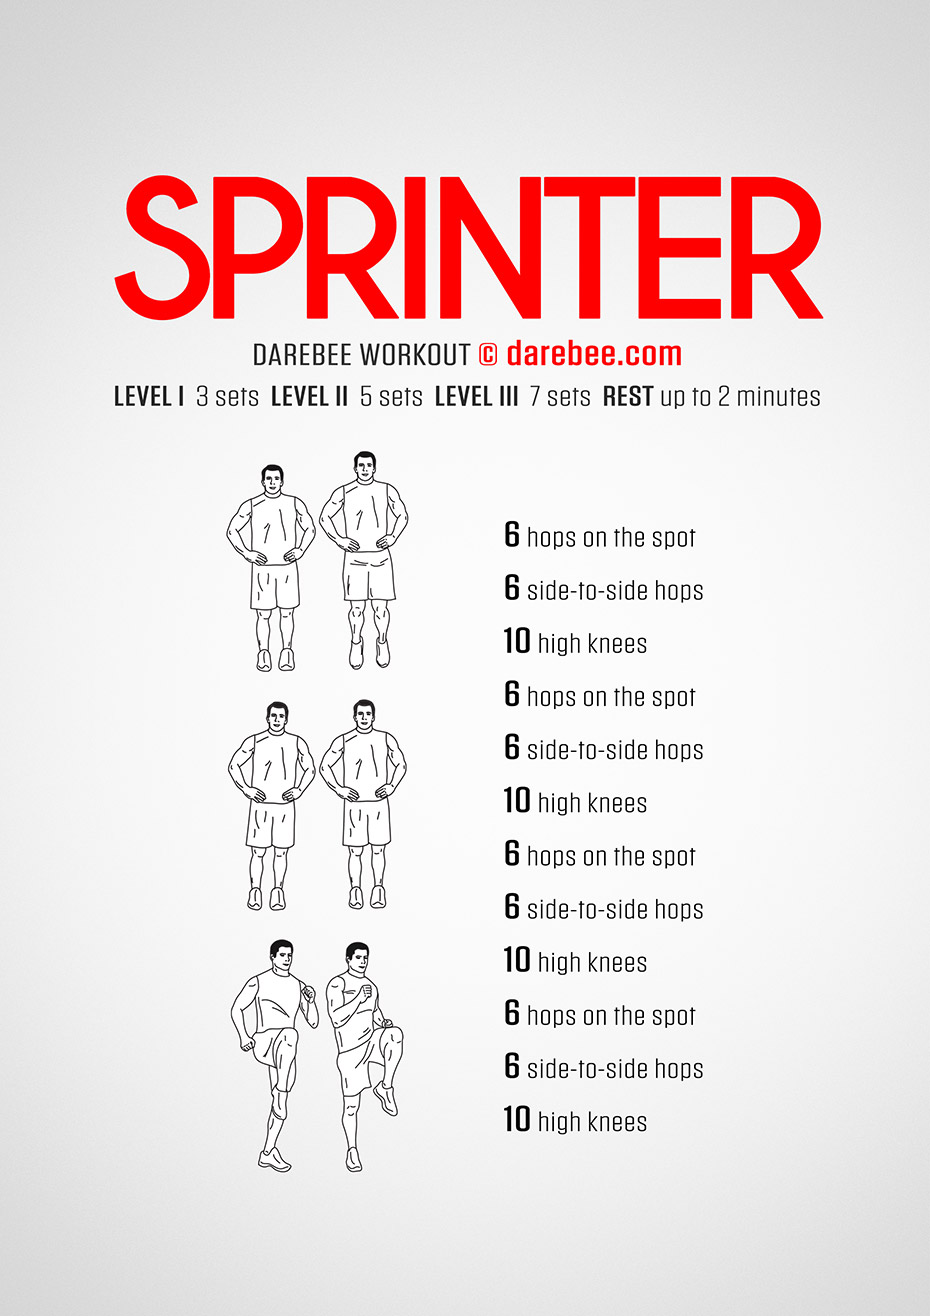 Sprinter Workout